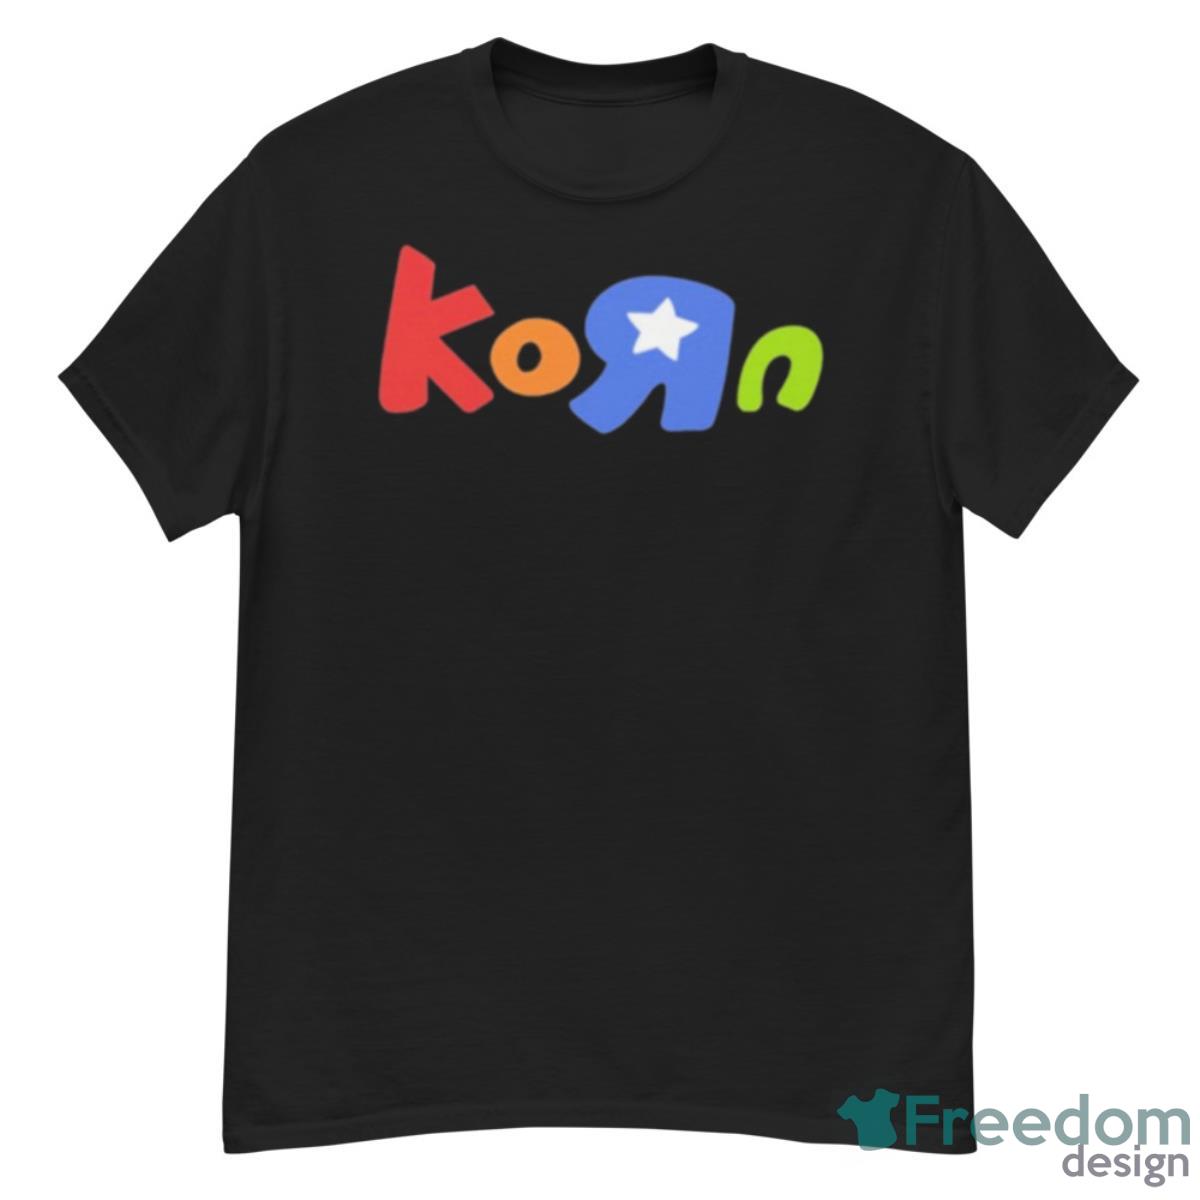 Cringeys Korn Shirt - G500 Men’s Classic T-Shirt